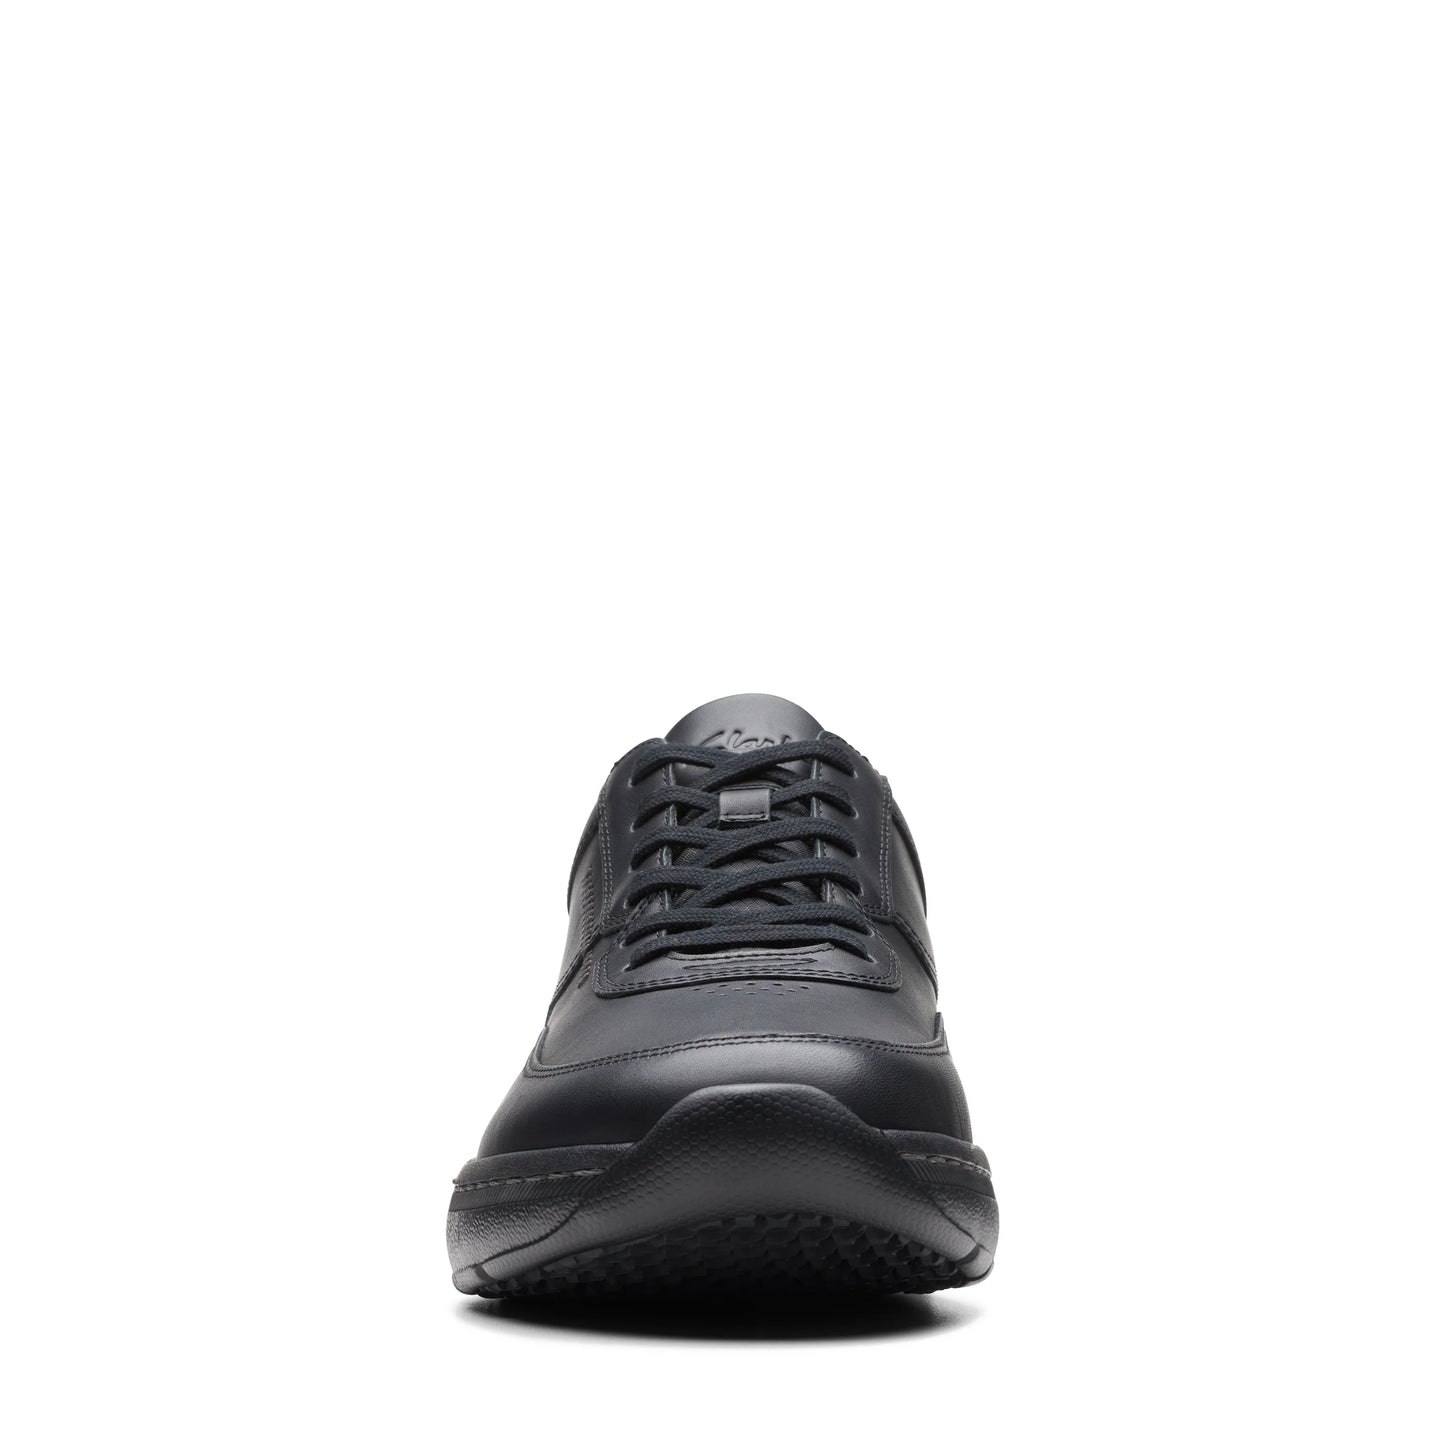 CLARKS | 남자 더비 신발 | CLARKS PRO LACE BLACK LEATHER | 검은색